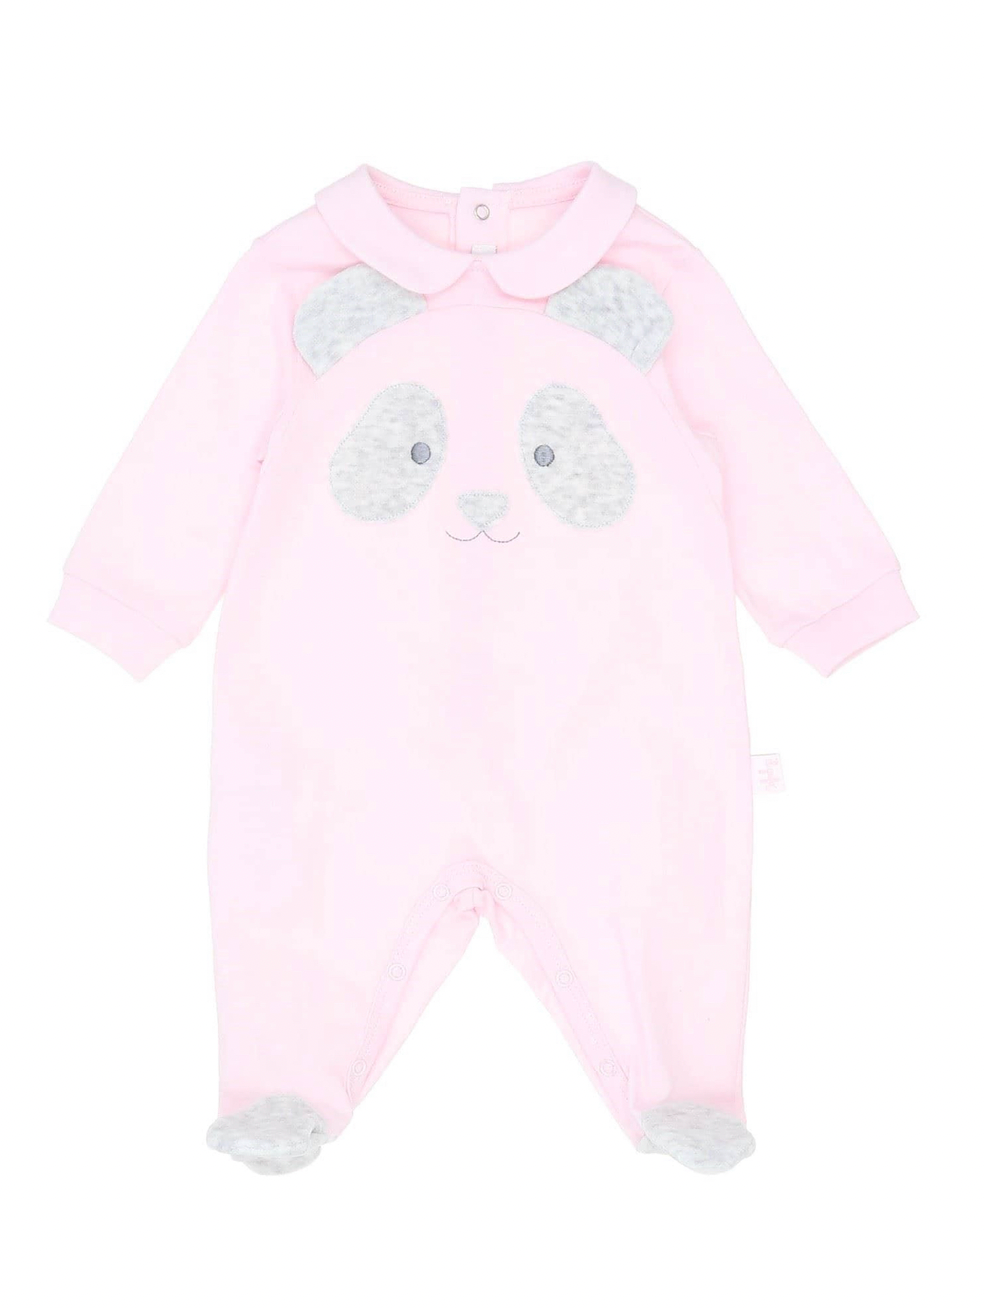 IL GUFO - Pink pajamas - 6 months